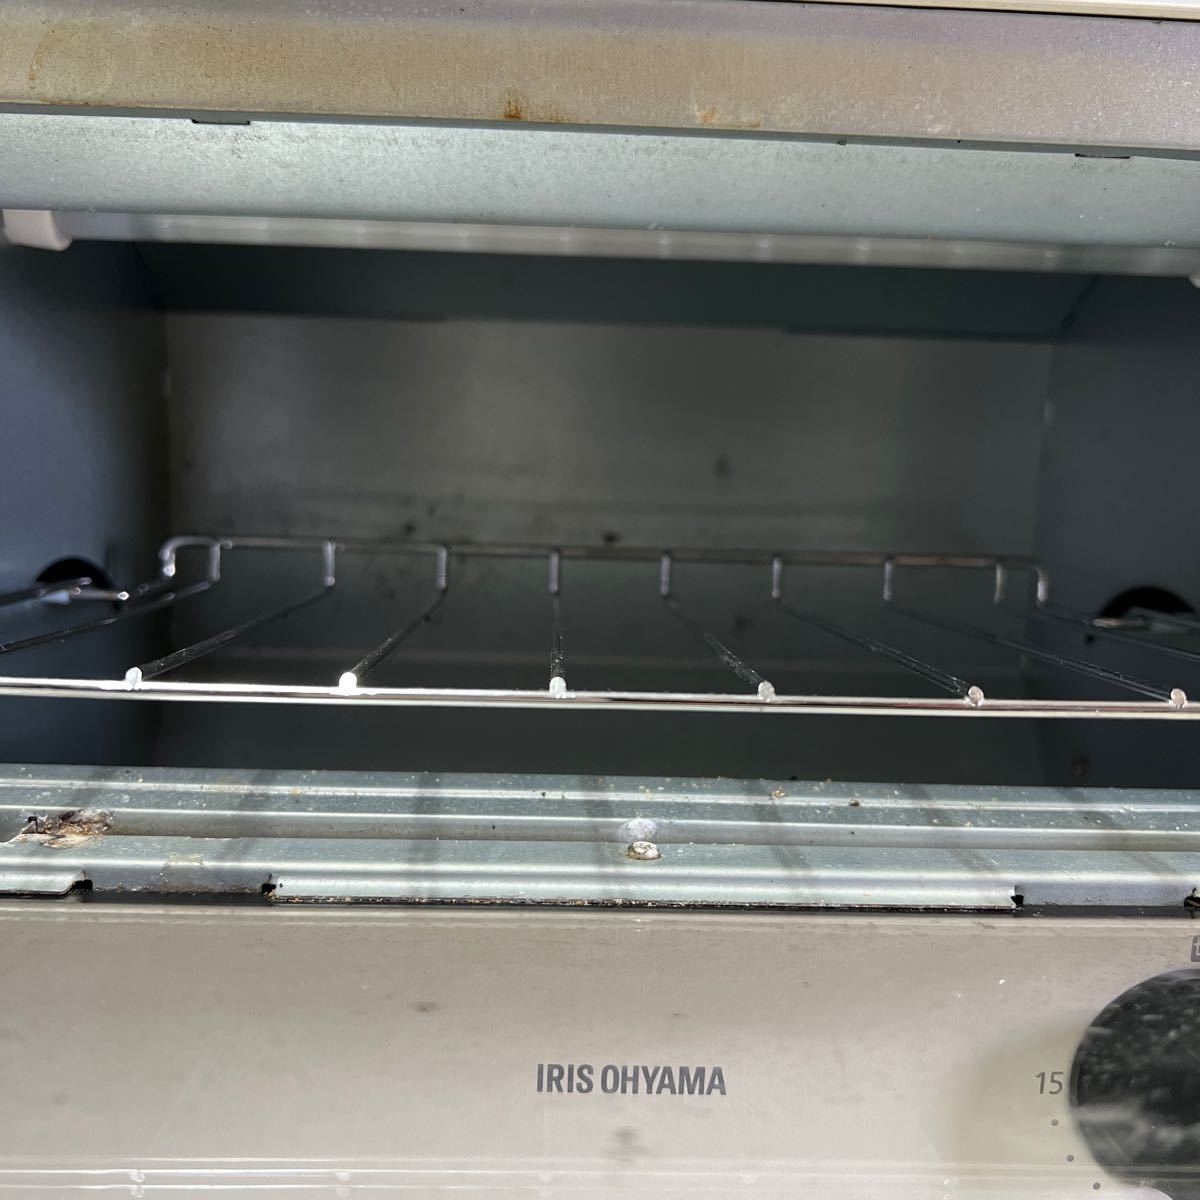  oven toaster Iris o-yama toaster white 2021 year made l-2305